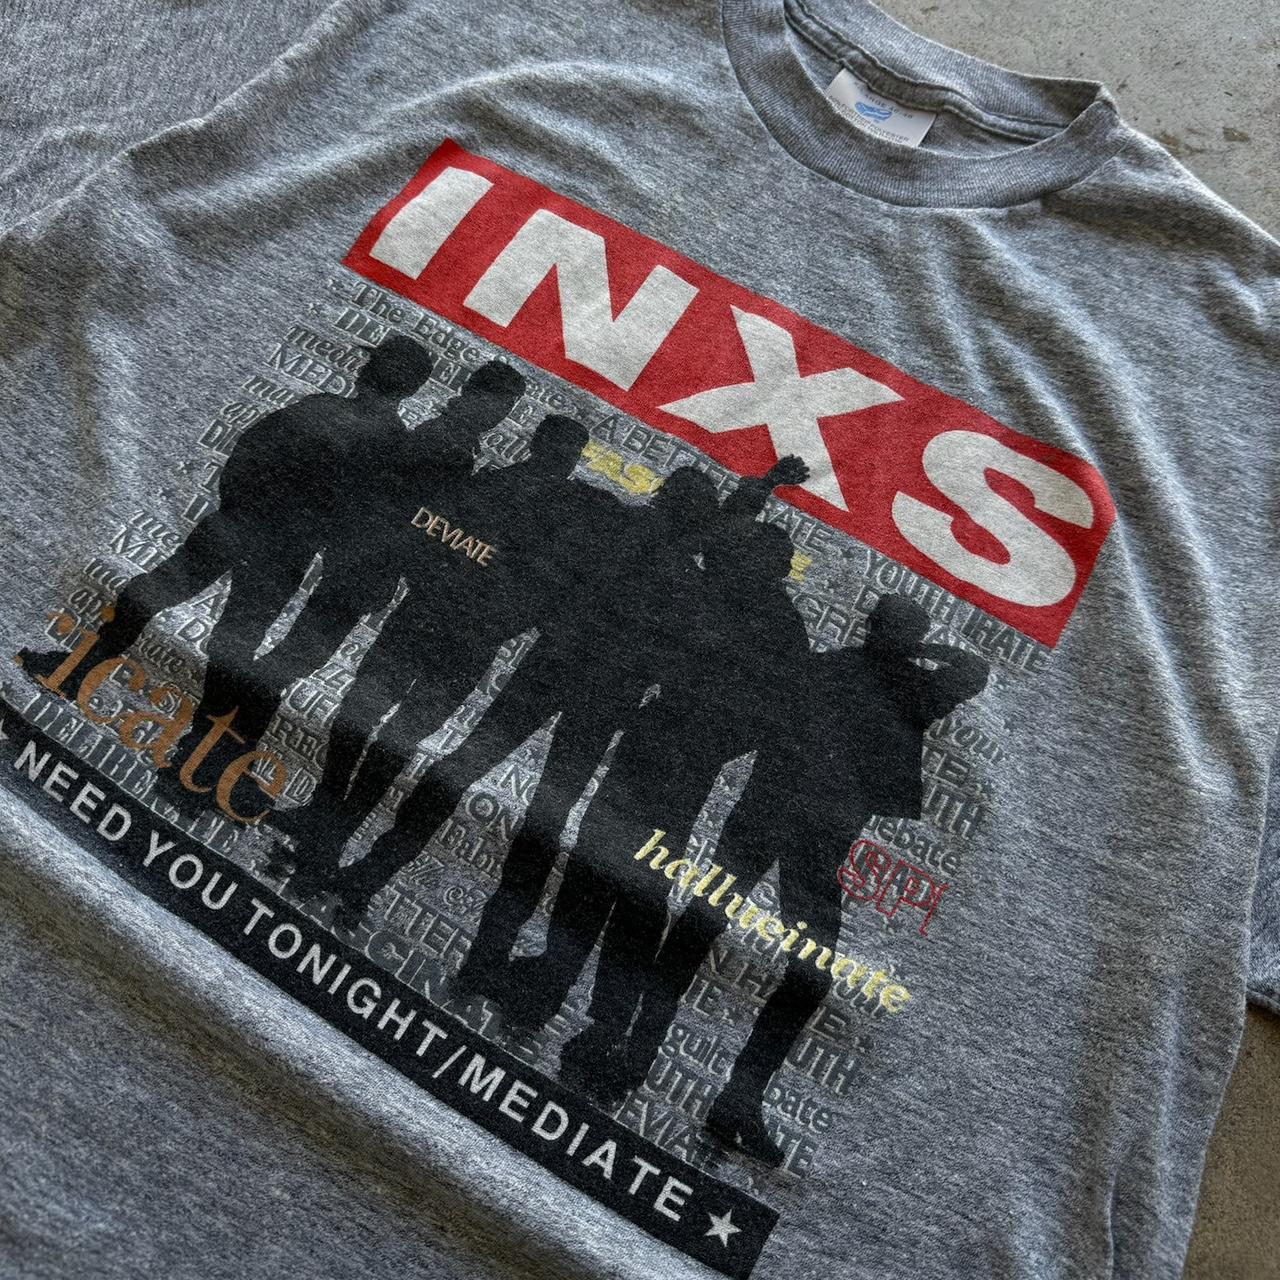 Vintage 1987 INXS Kick Need You Tonight Tour Shirt Size XL